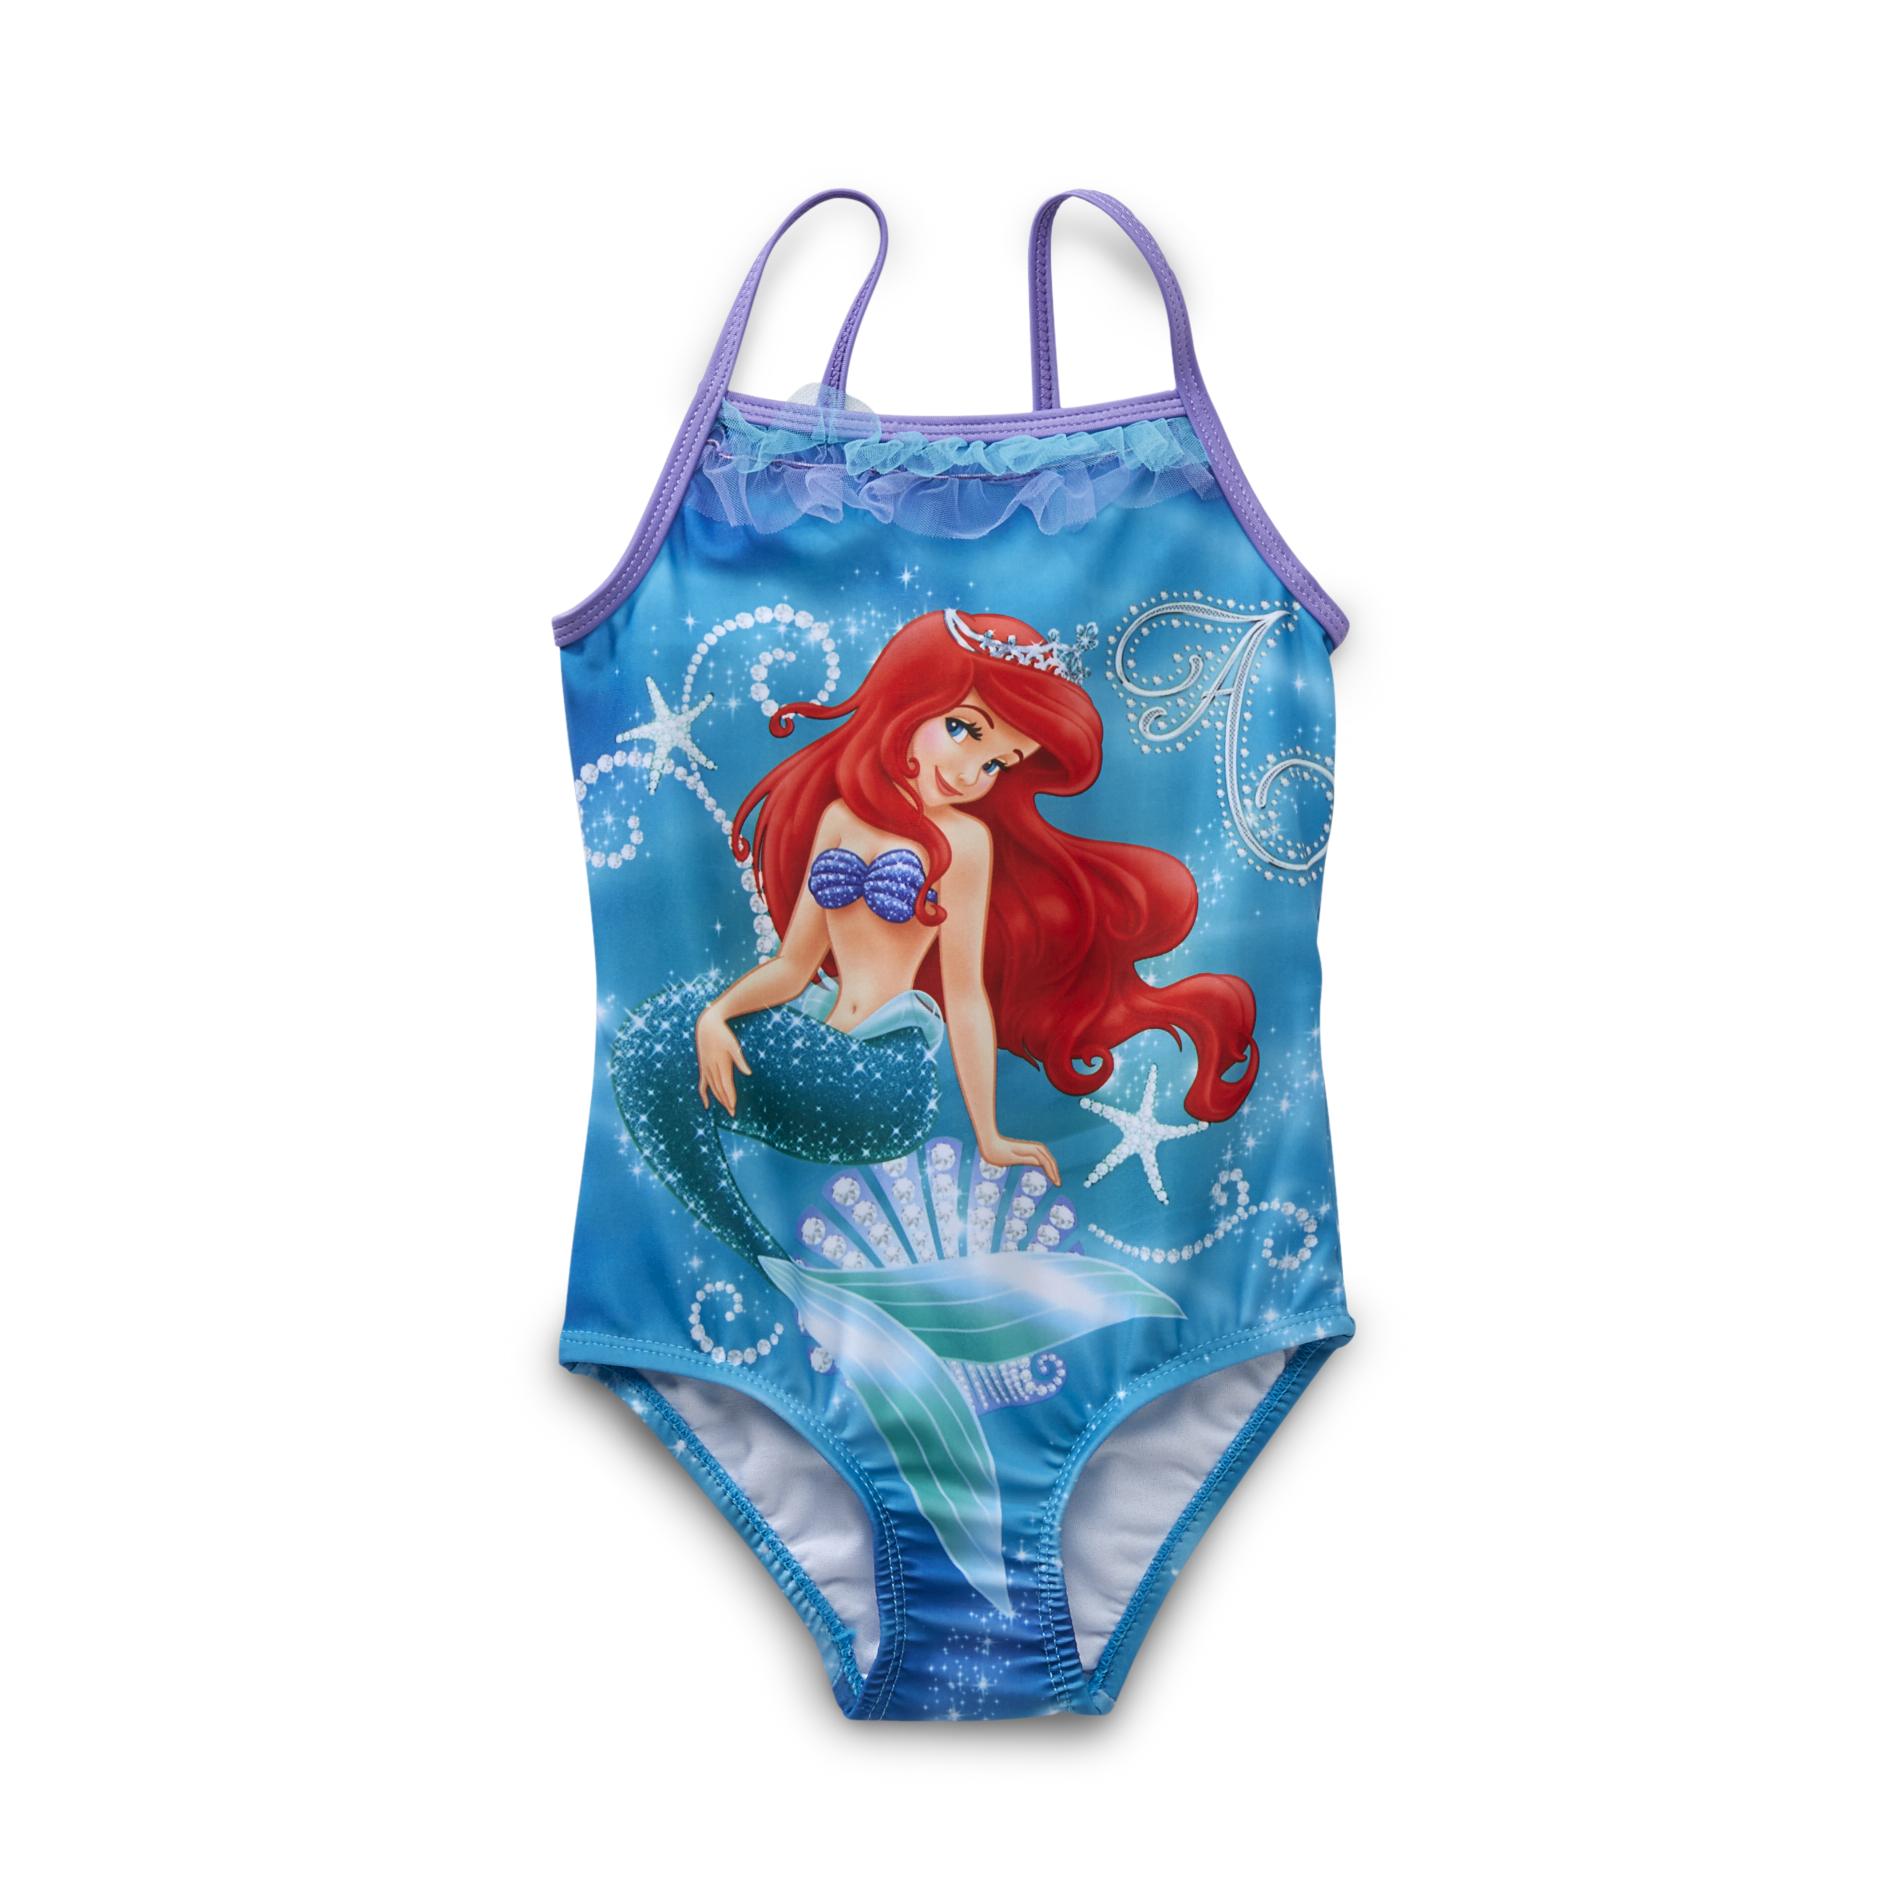 Disney Toddler Girl's One-Piece Swimsuit - Ariel